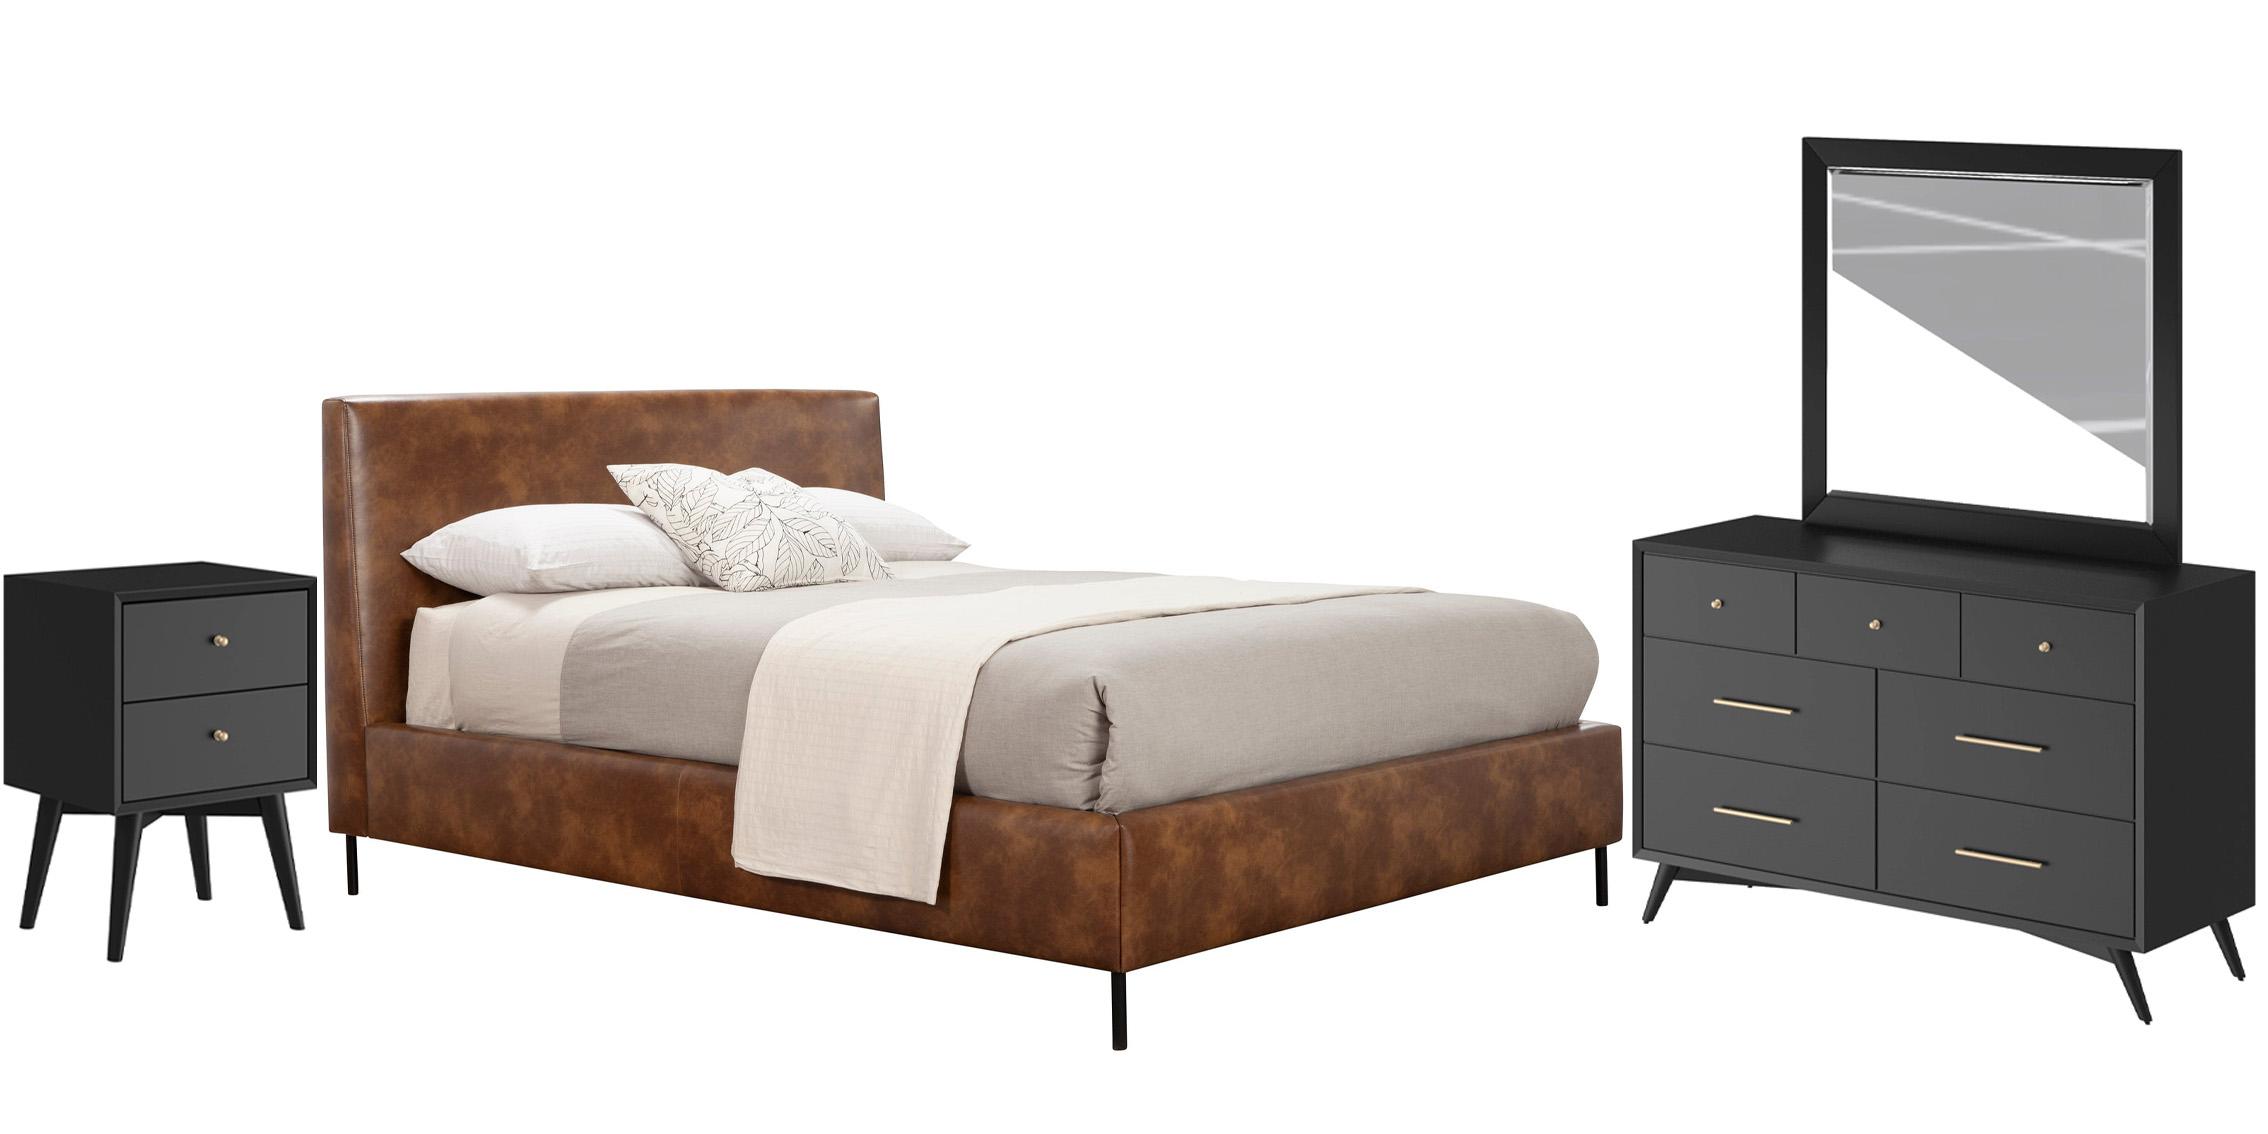 Modern, Rustic Platform Bedroom Set SOPHIA/FLYNN 6902Q-BRN-Set-4-BLK in Brown, Black Faux Leather